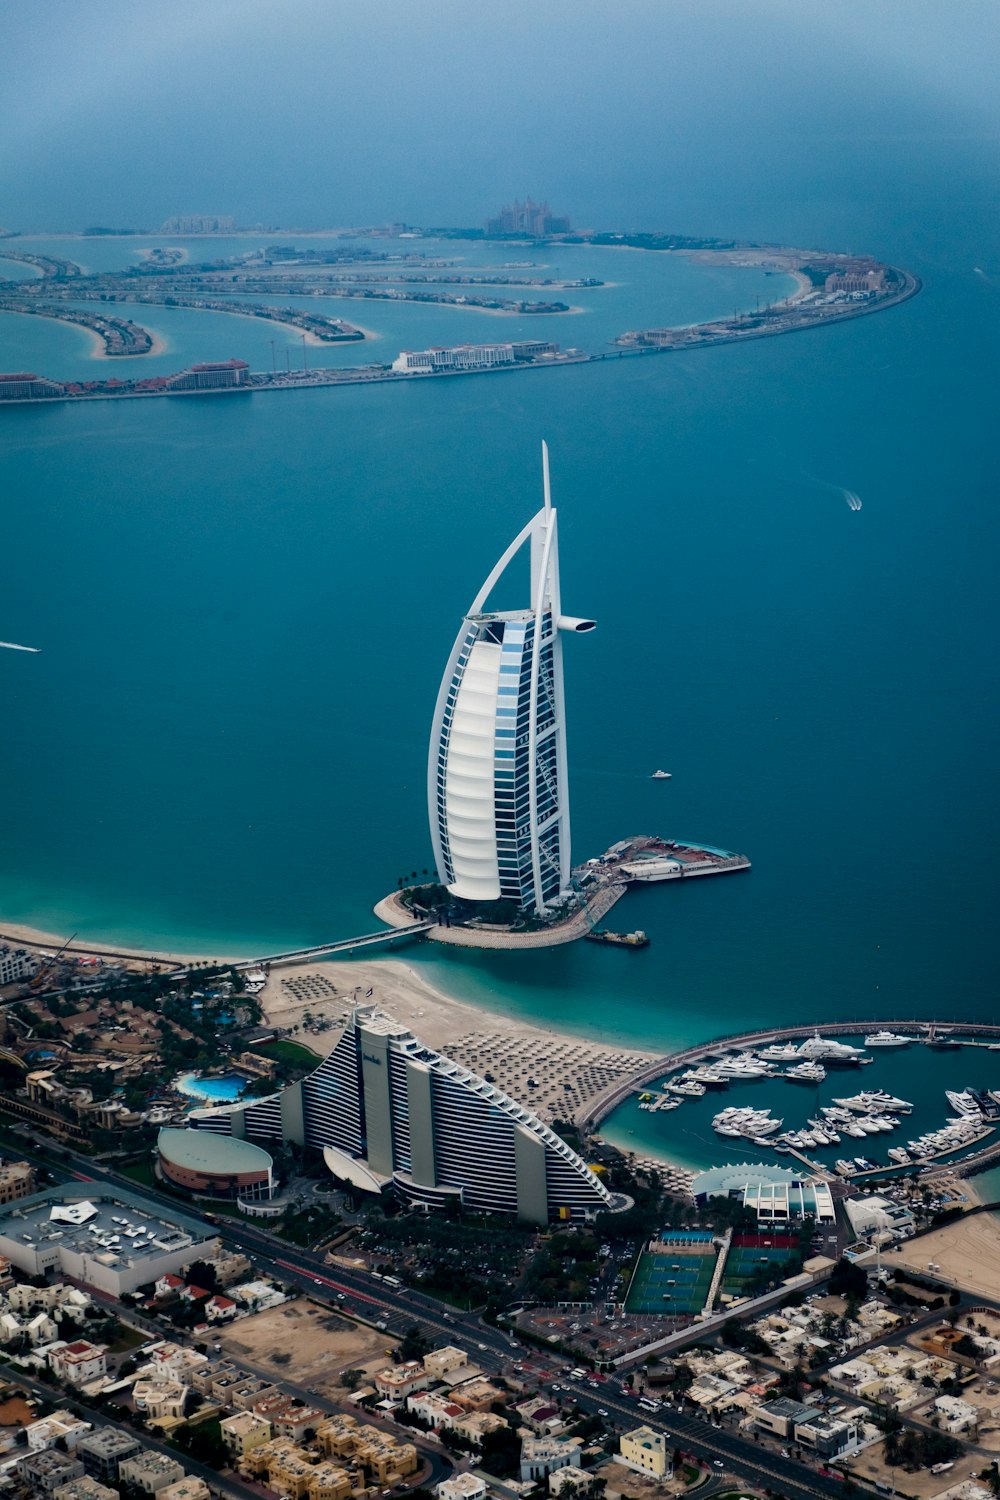 Burj Al Arab Jumeirah Pictures | Download Free Images on Unsplash